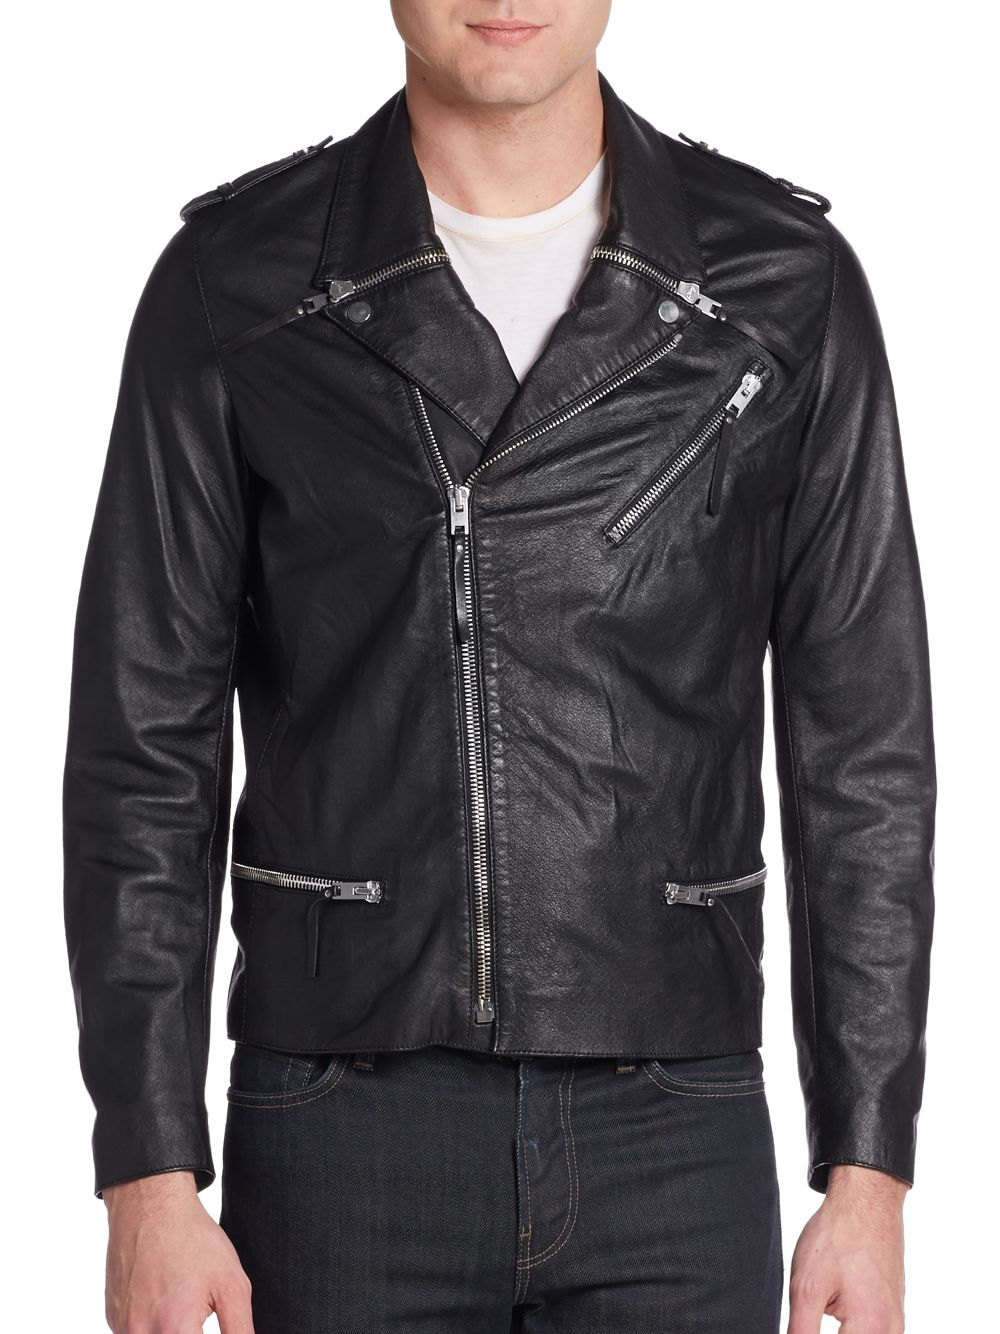 The Kooples Snake-embossed Leather Jacket in Black for Men - Lyst